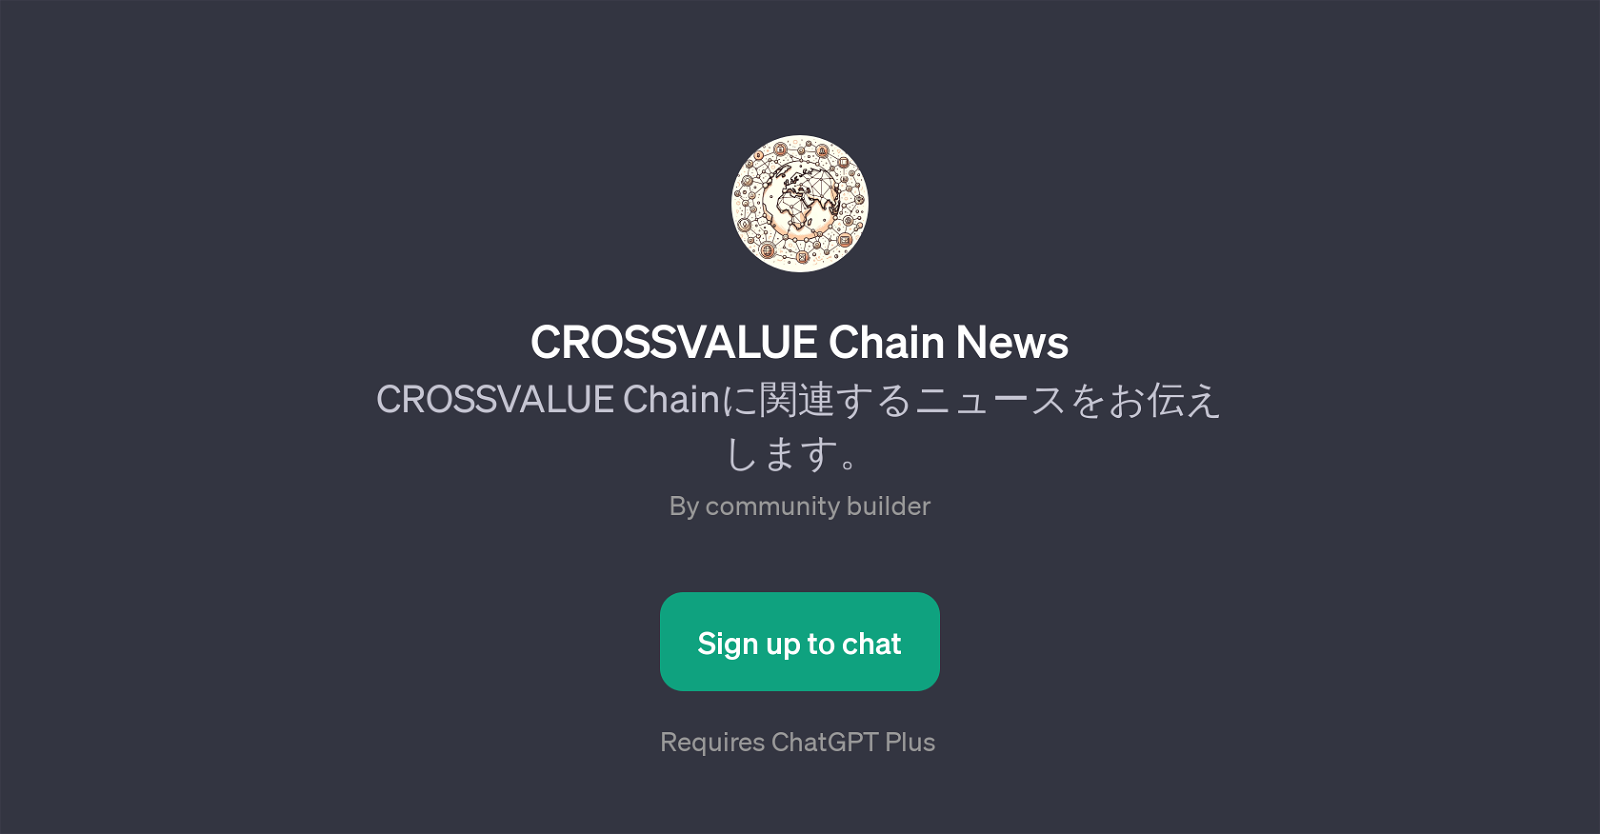 CROSSVALUE Chain News GPT website